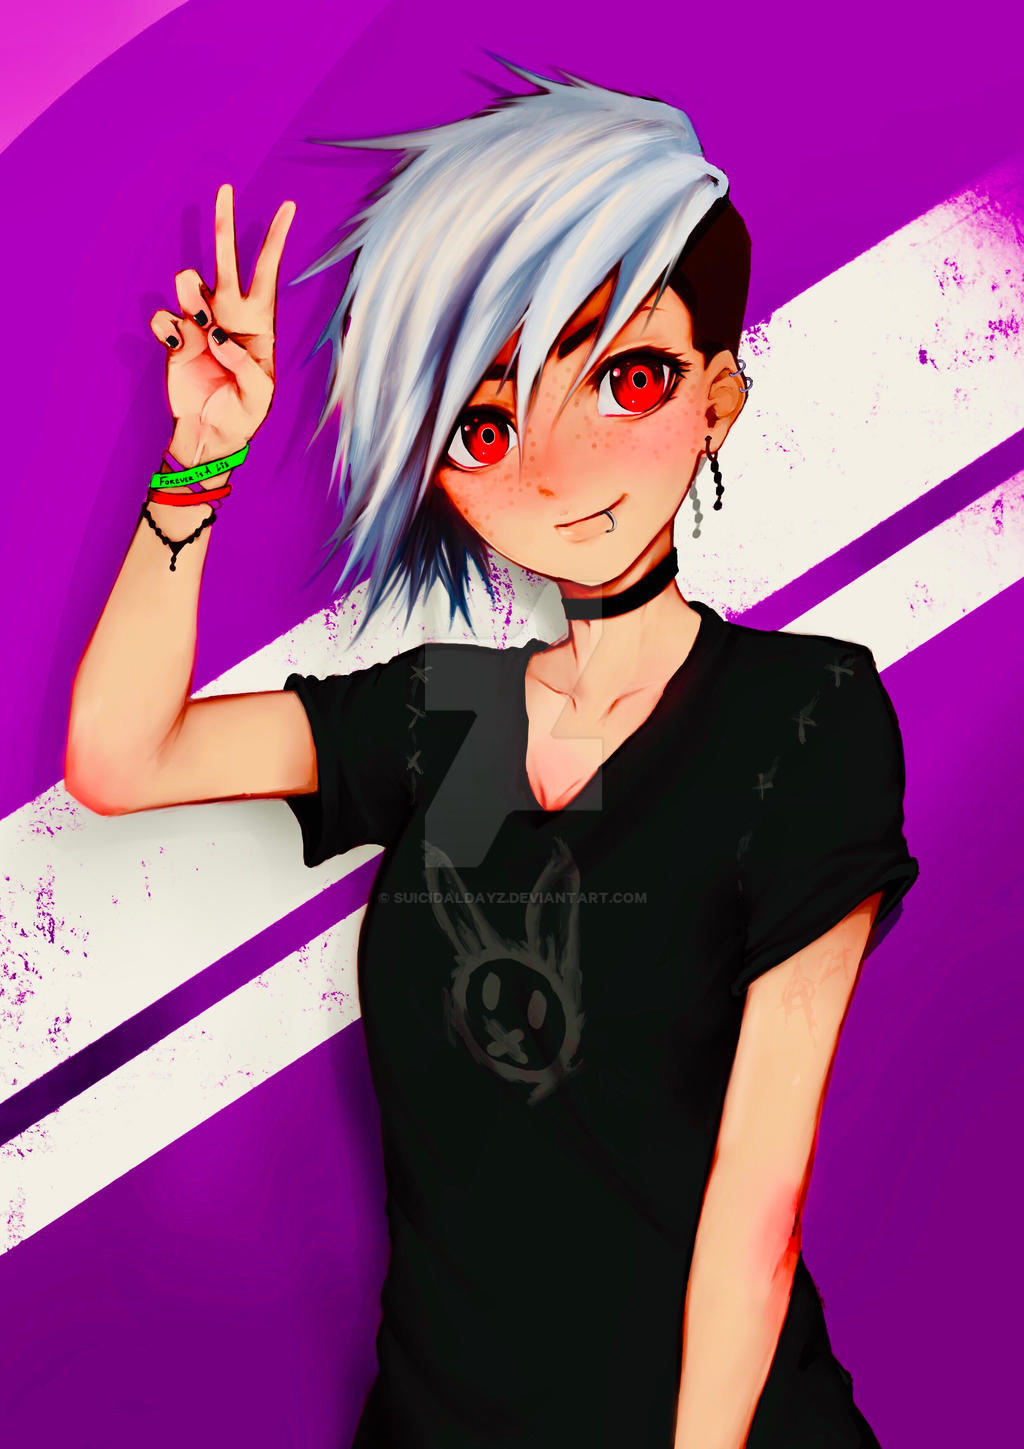 Anime Style punk girl by Suicidaldayz on DeviantArt